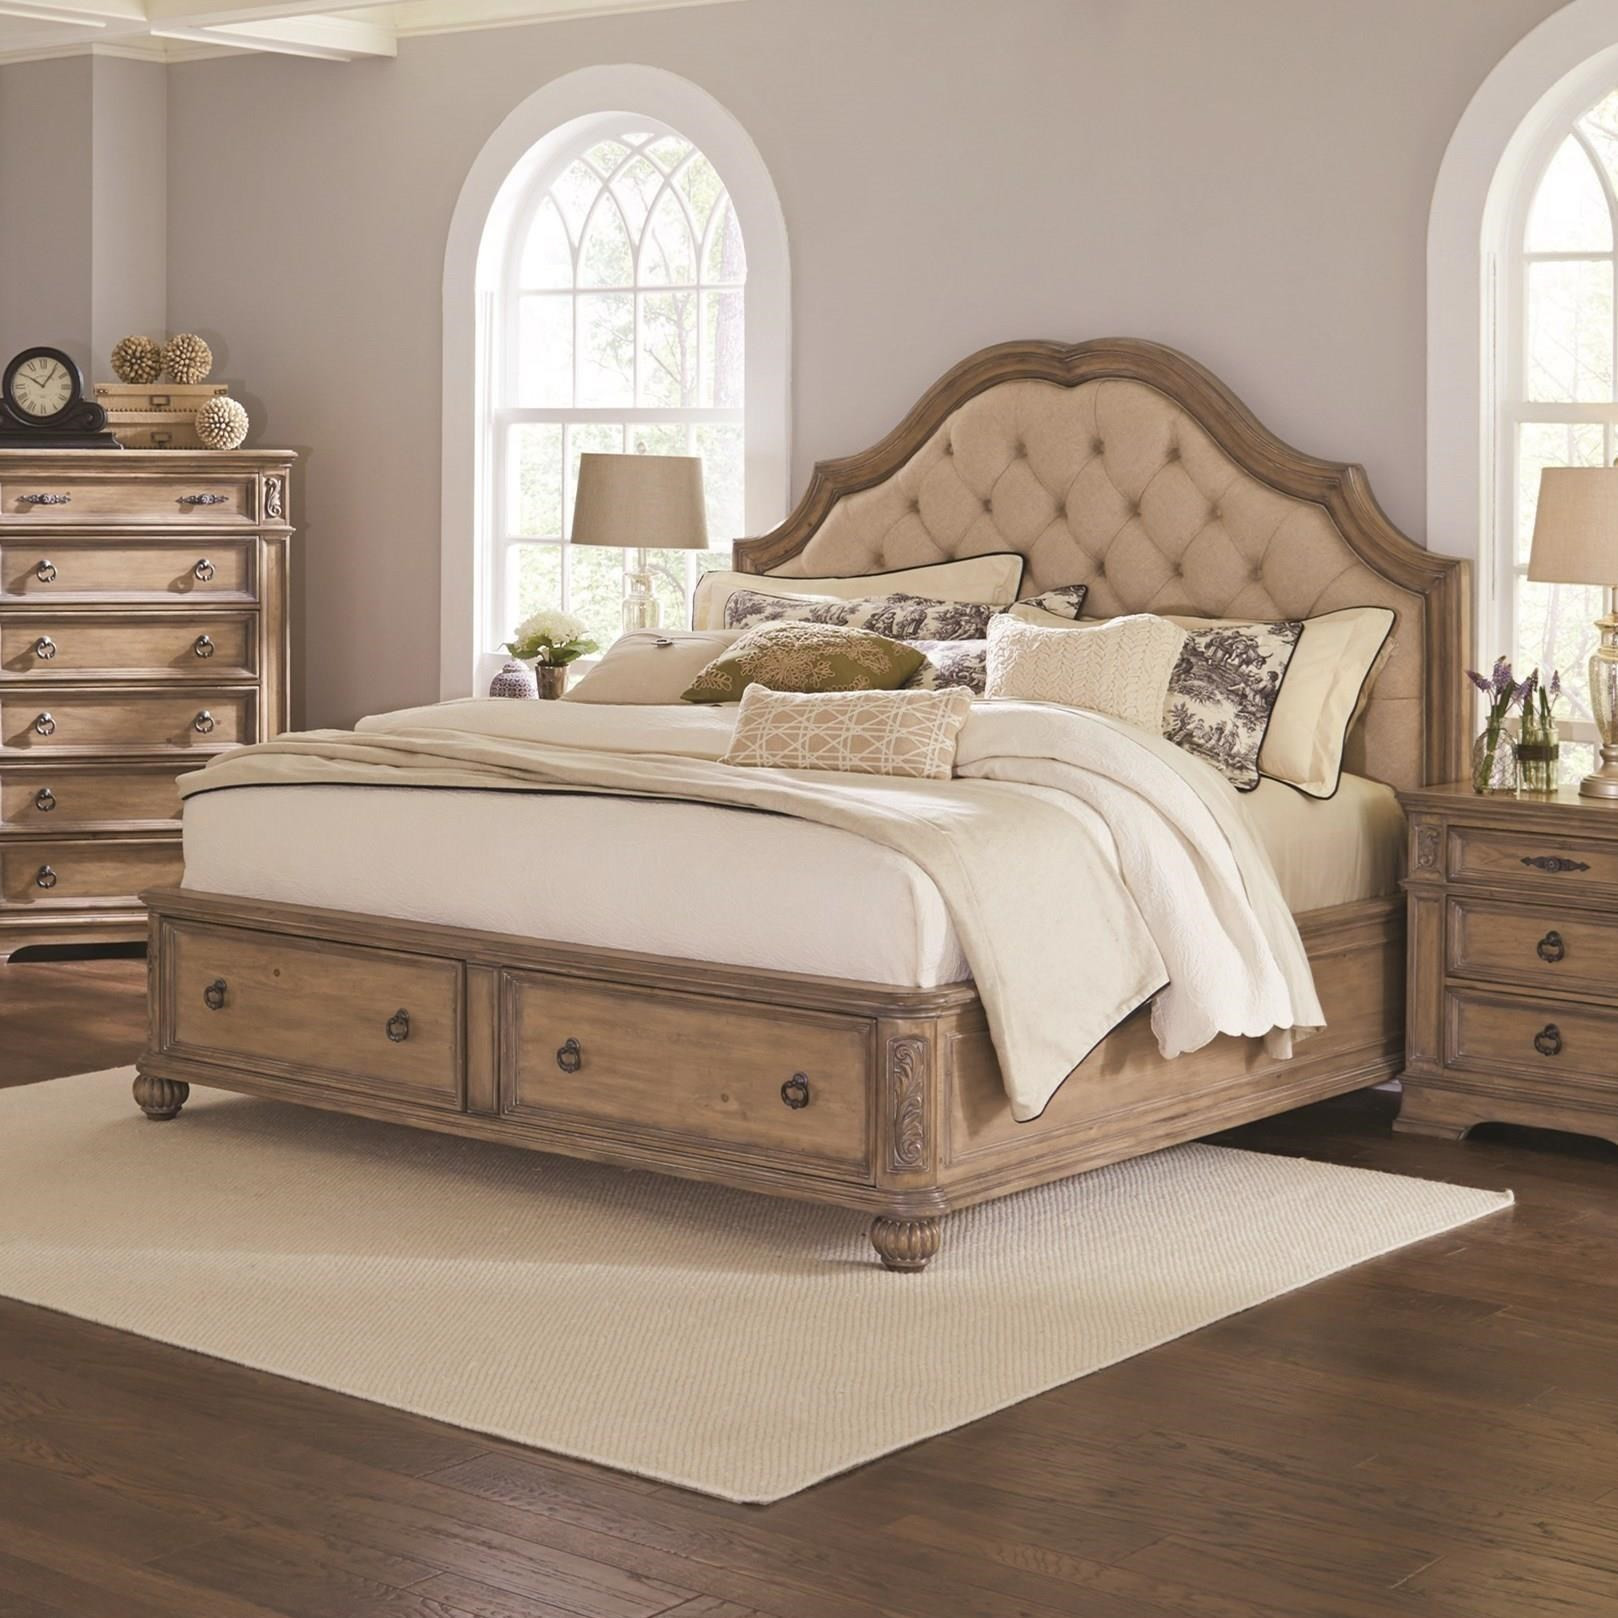 Queen Size Storage Bedroom Sets
 Coaster Ilana Queen Storage Bed with Upholstered Headboard